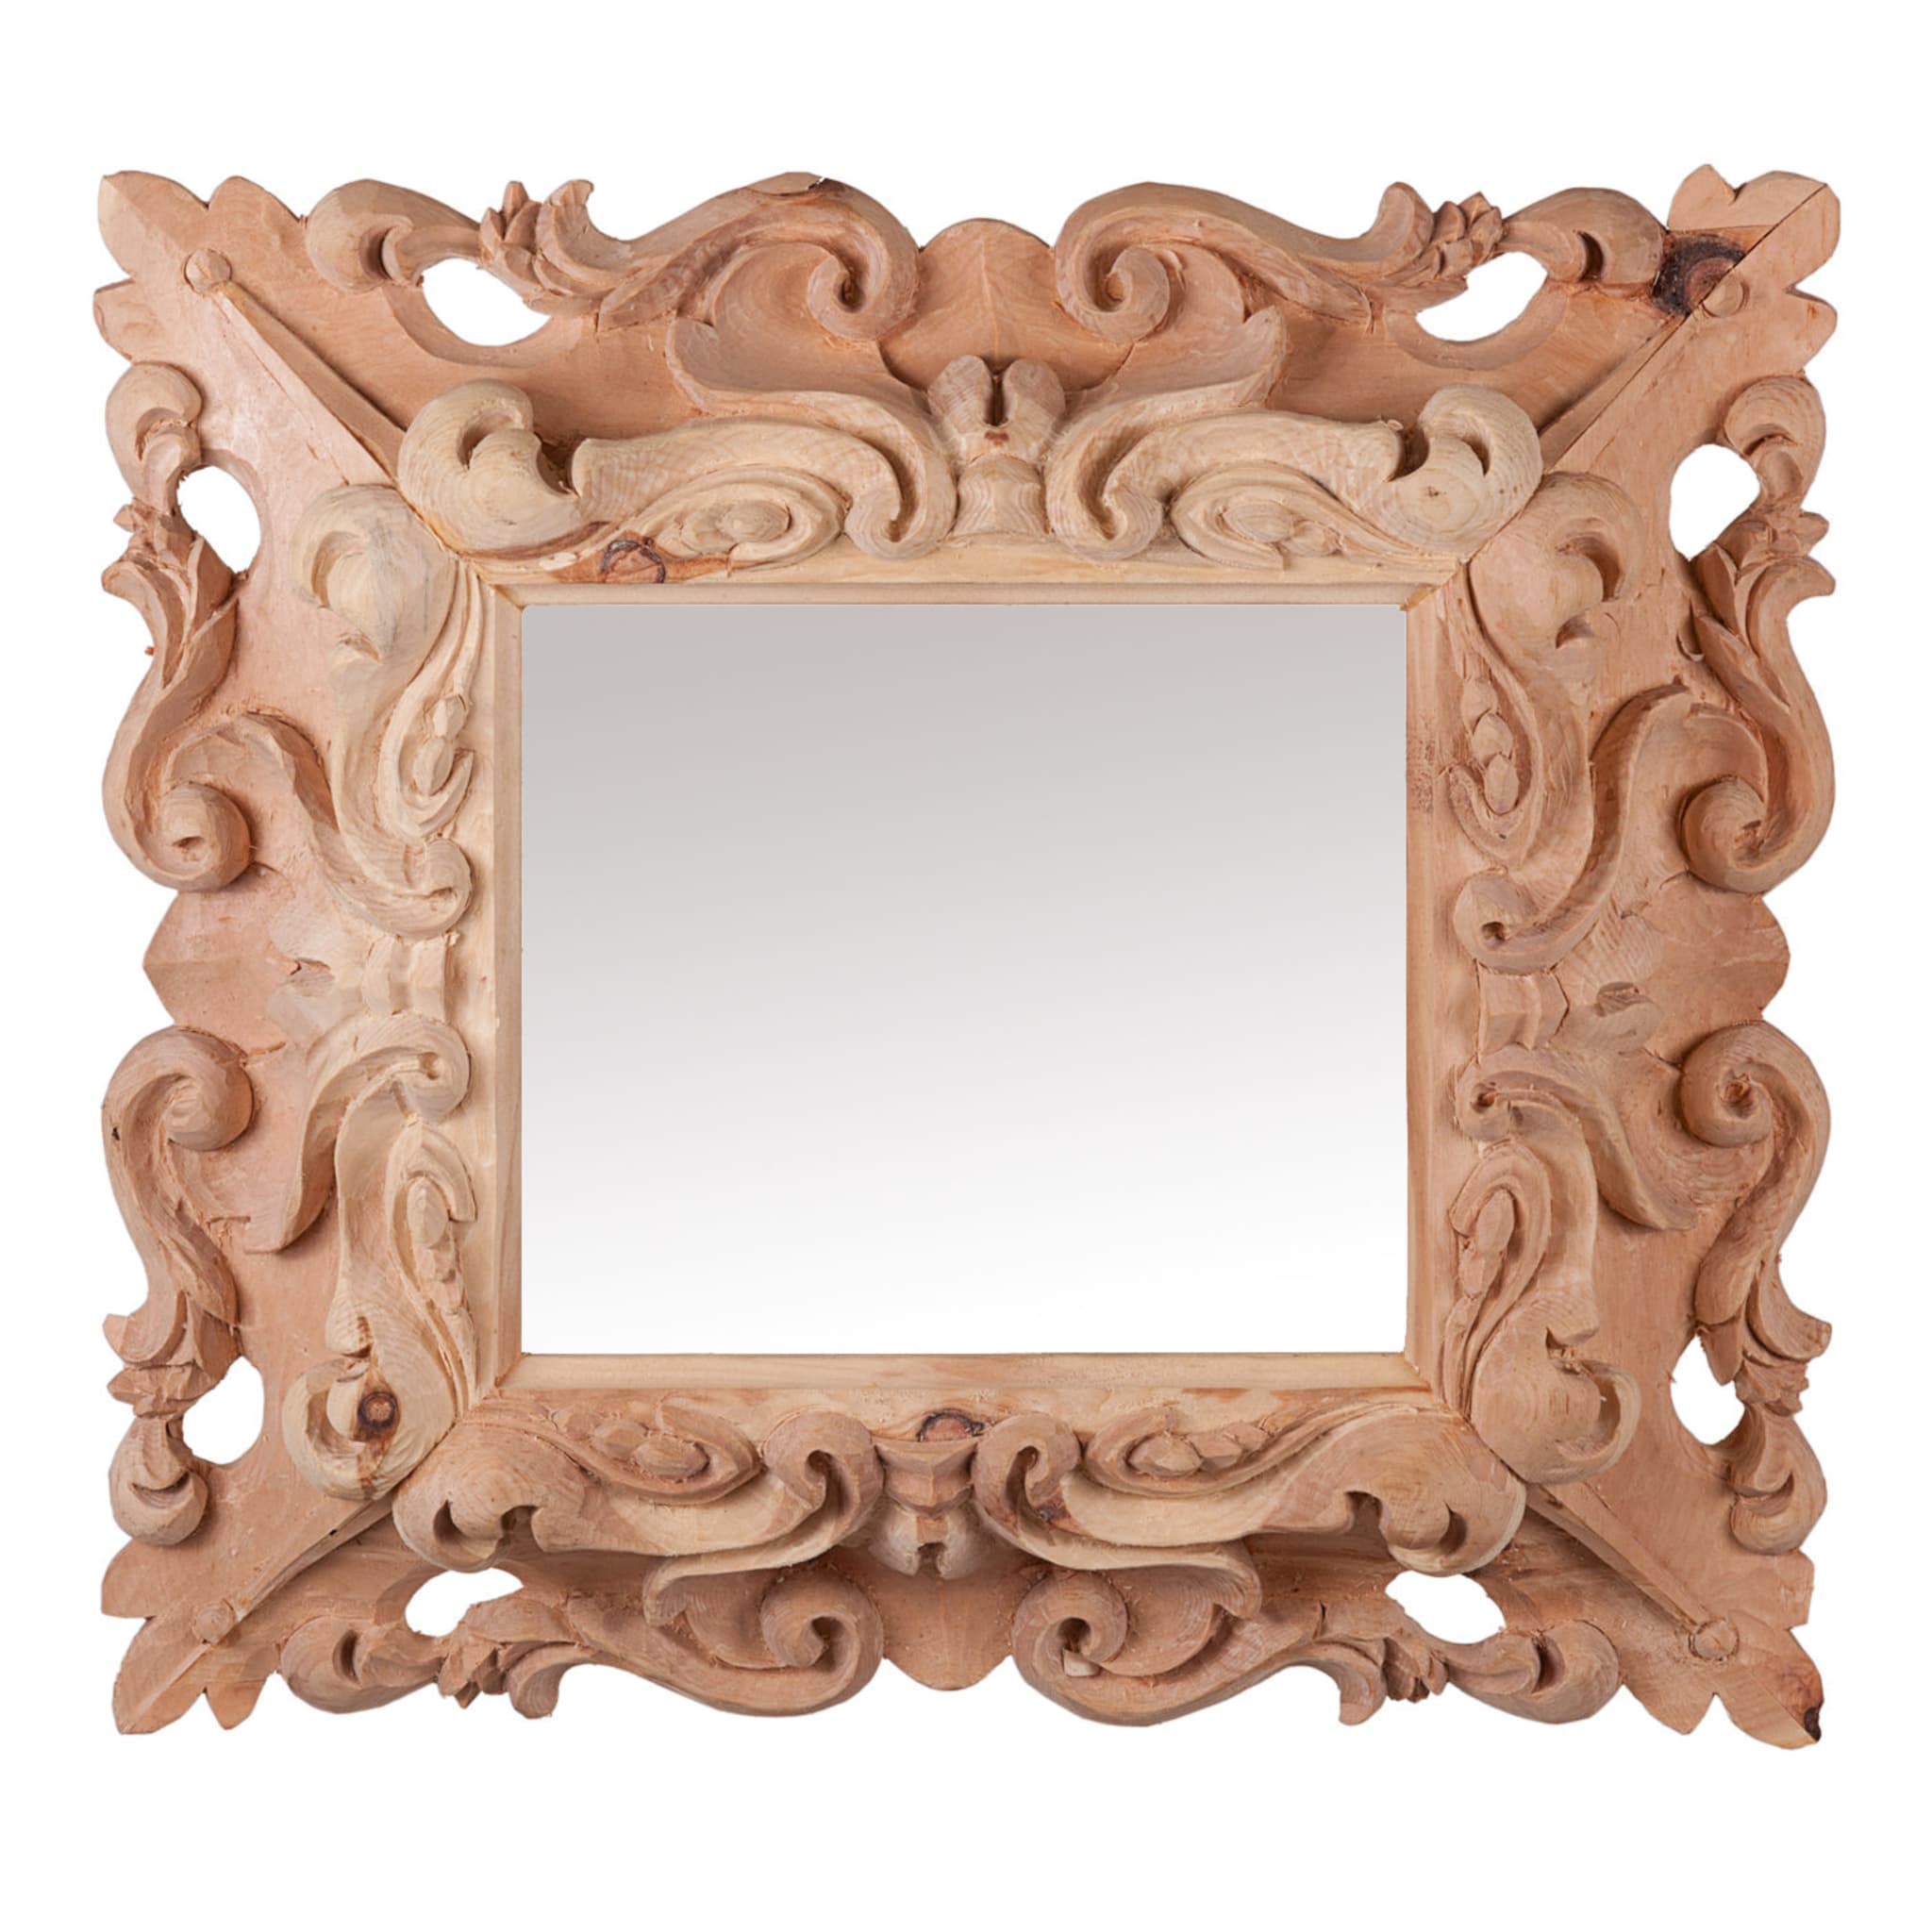 Medicea Palatina Carved Wood Mirror - Main view